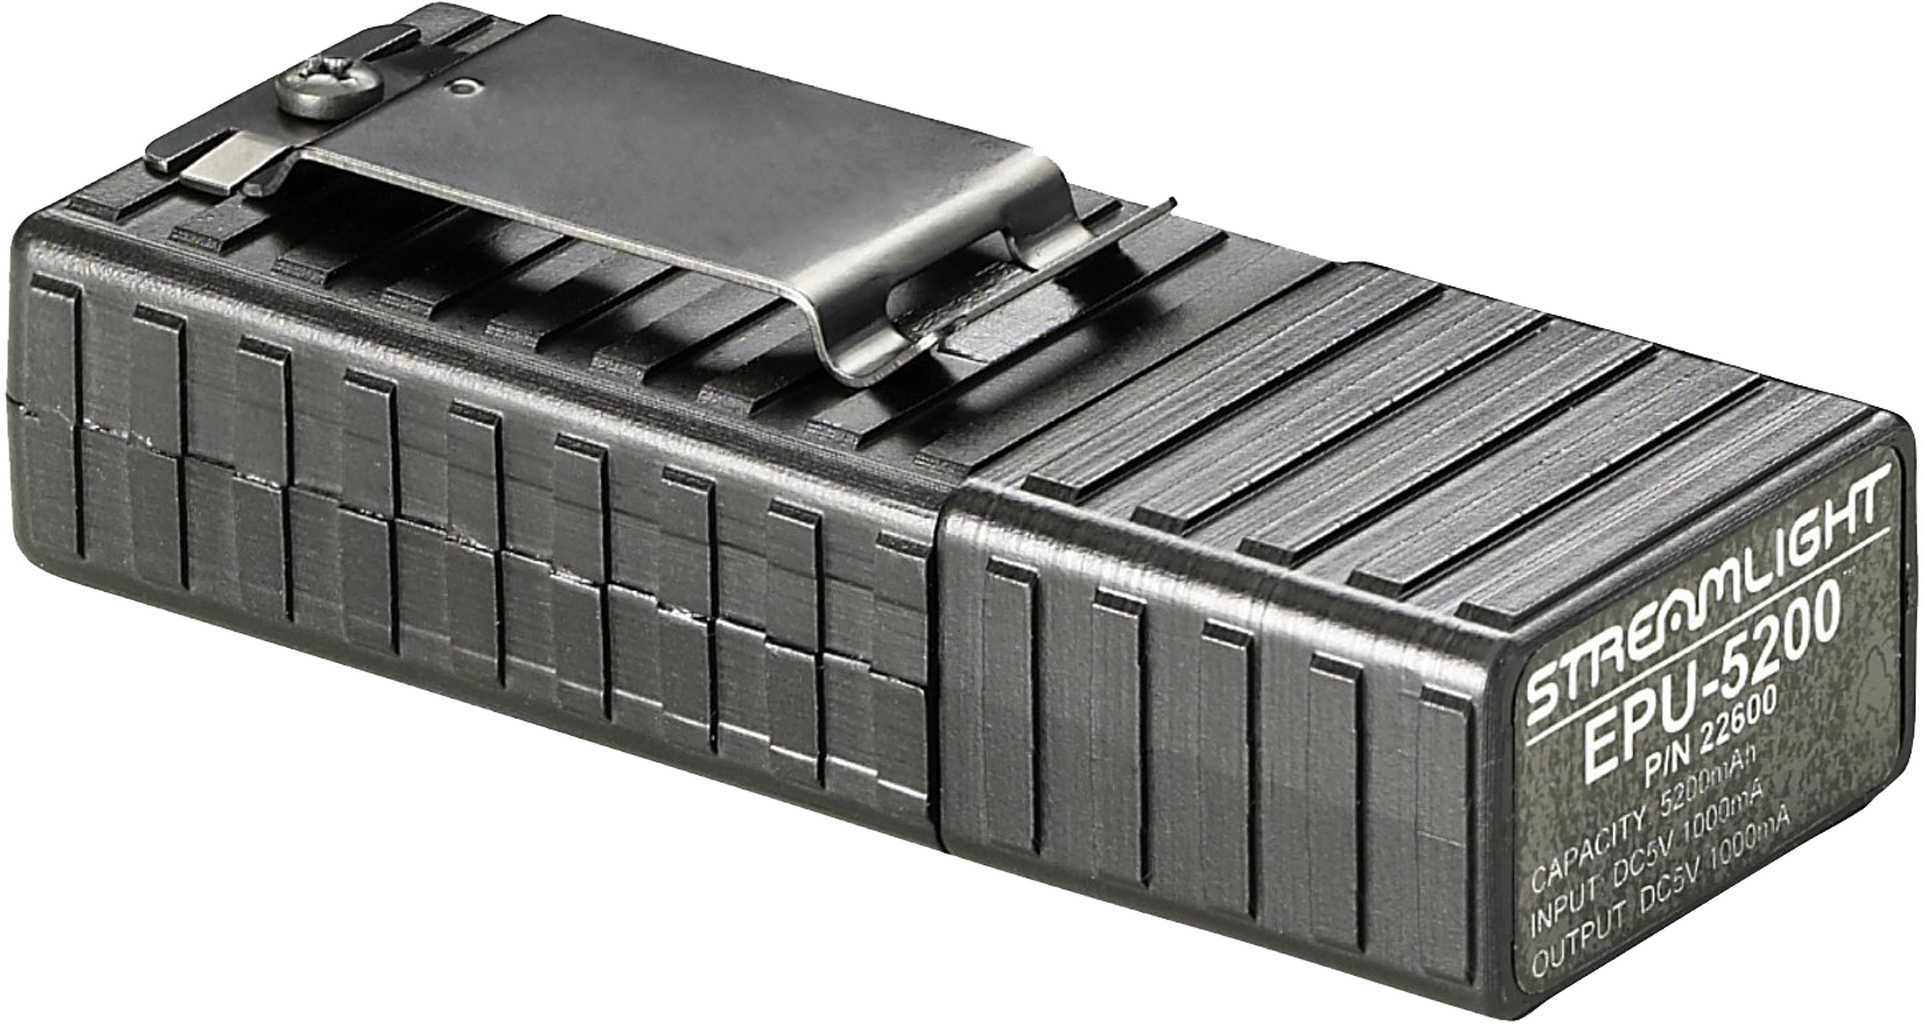 Streamlight EPU 5200 Portable USB Charger mAh Black with Integrated LED Flashlight Md: 22600